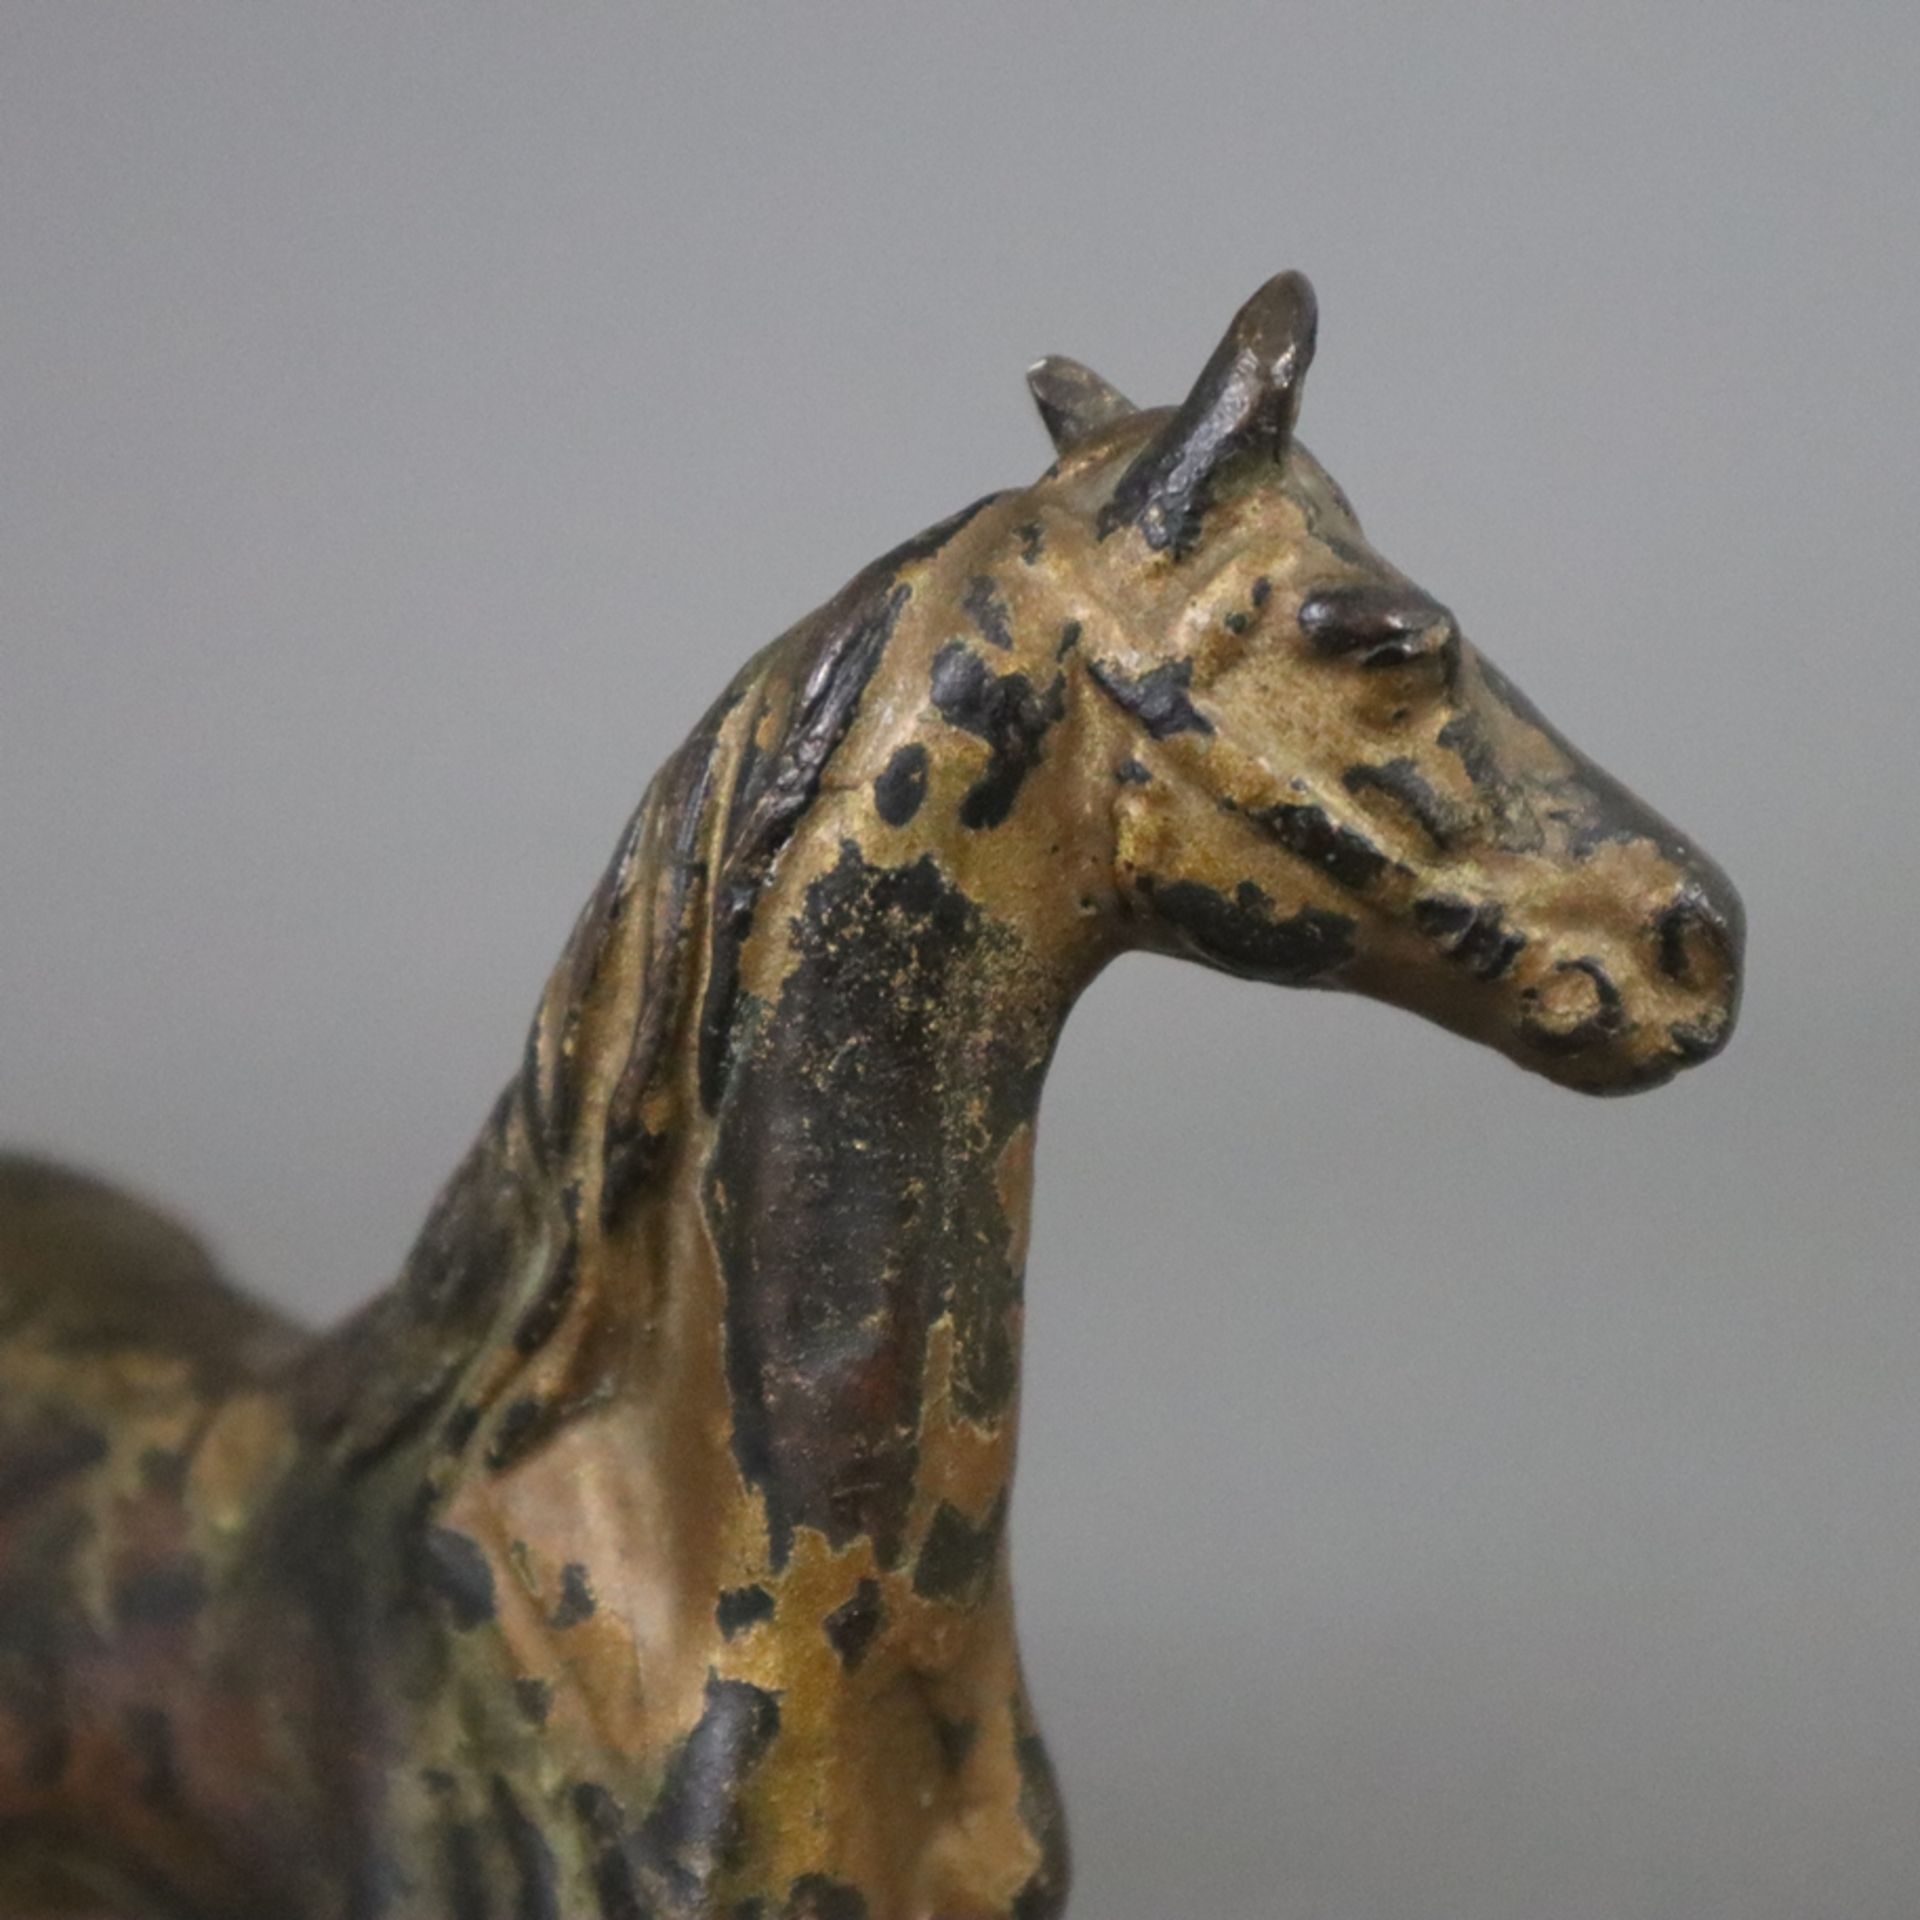 Tierskulptur "Pferd" - wohl 18. Jh., Bronze, schwerer Massivguss, Reste ehemaliger Vergoldung, natu - Bild 4 aus 6